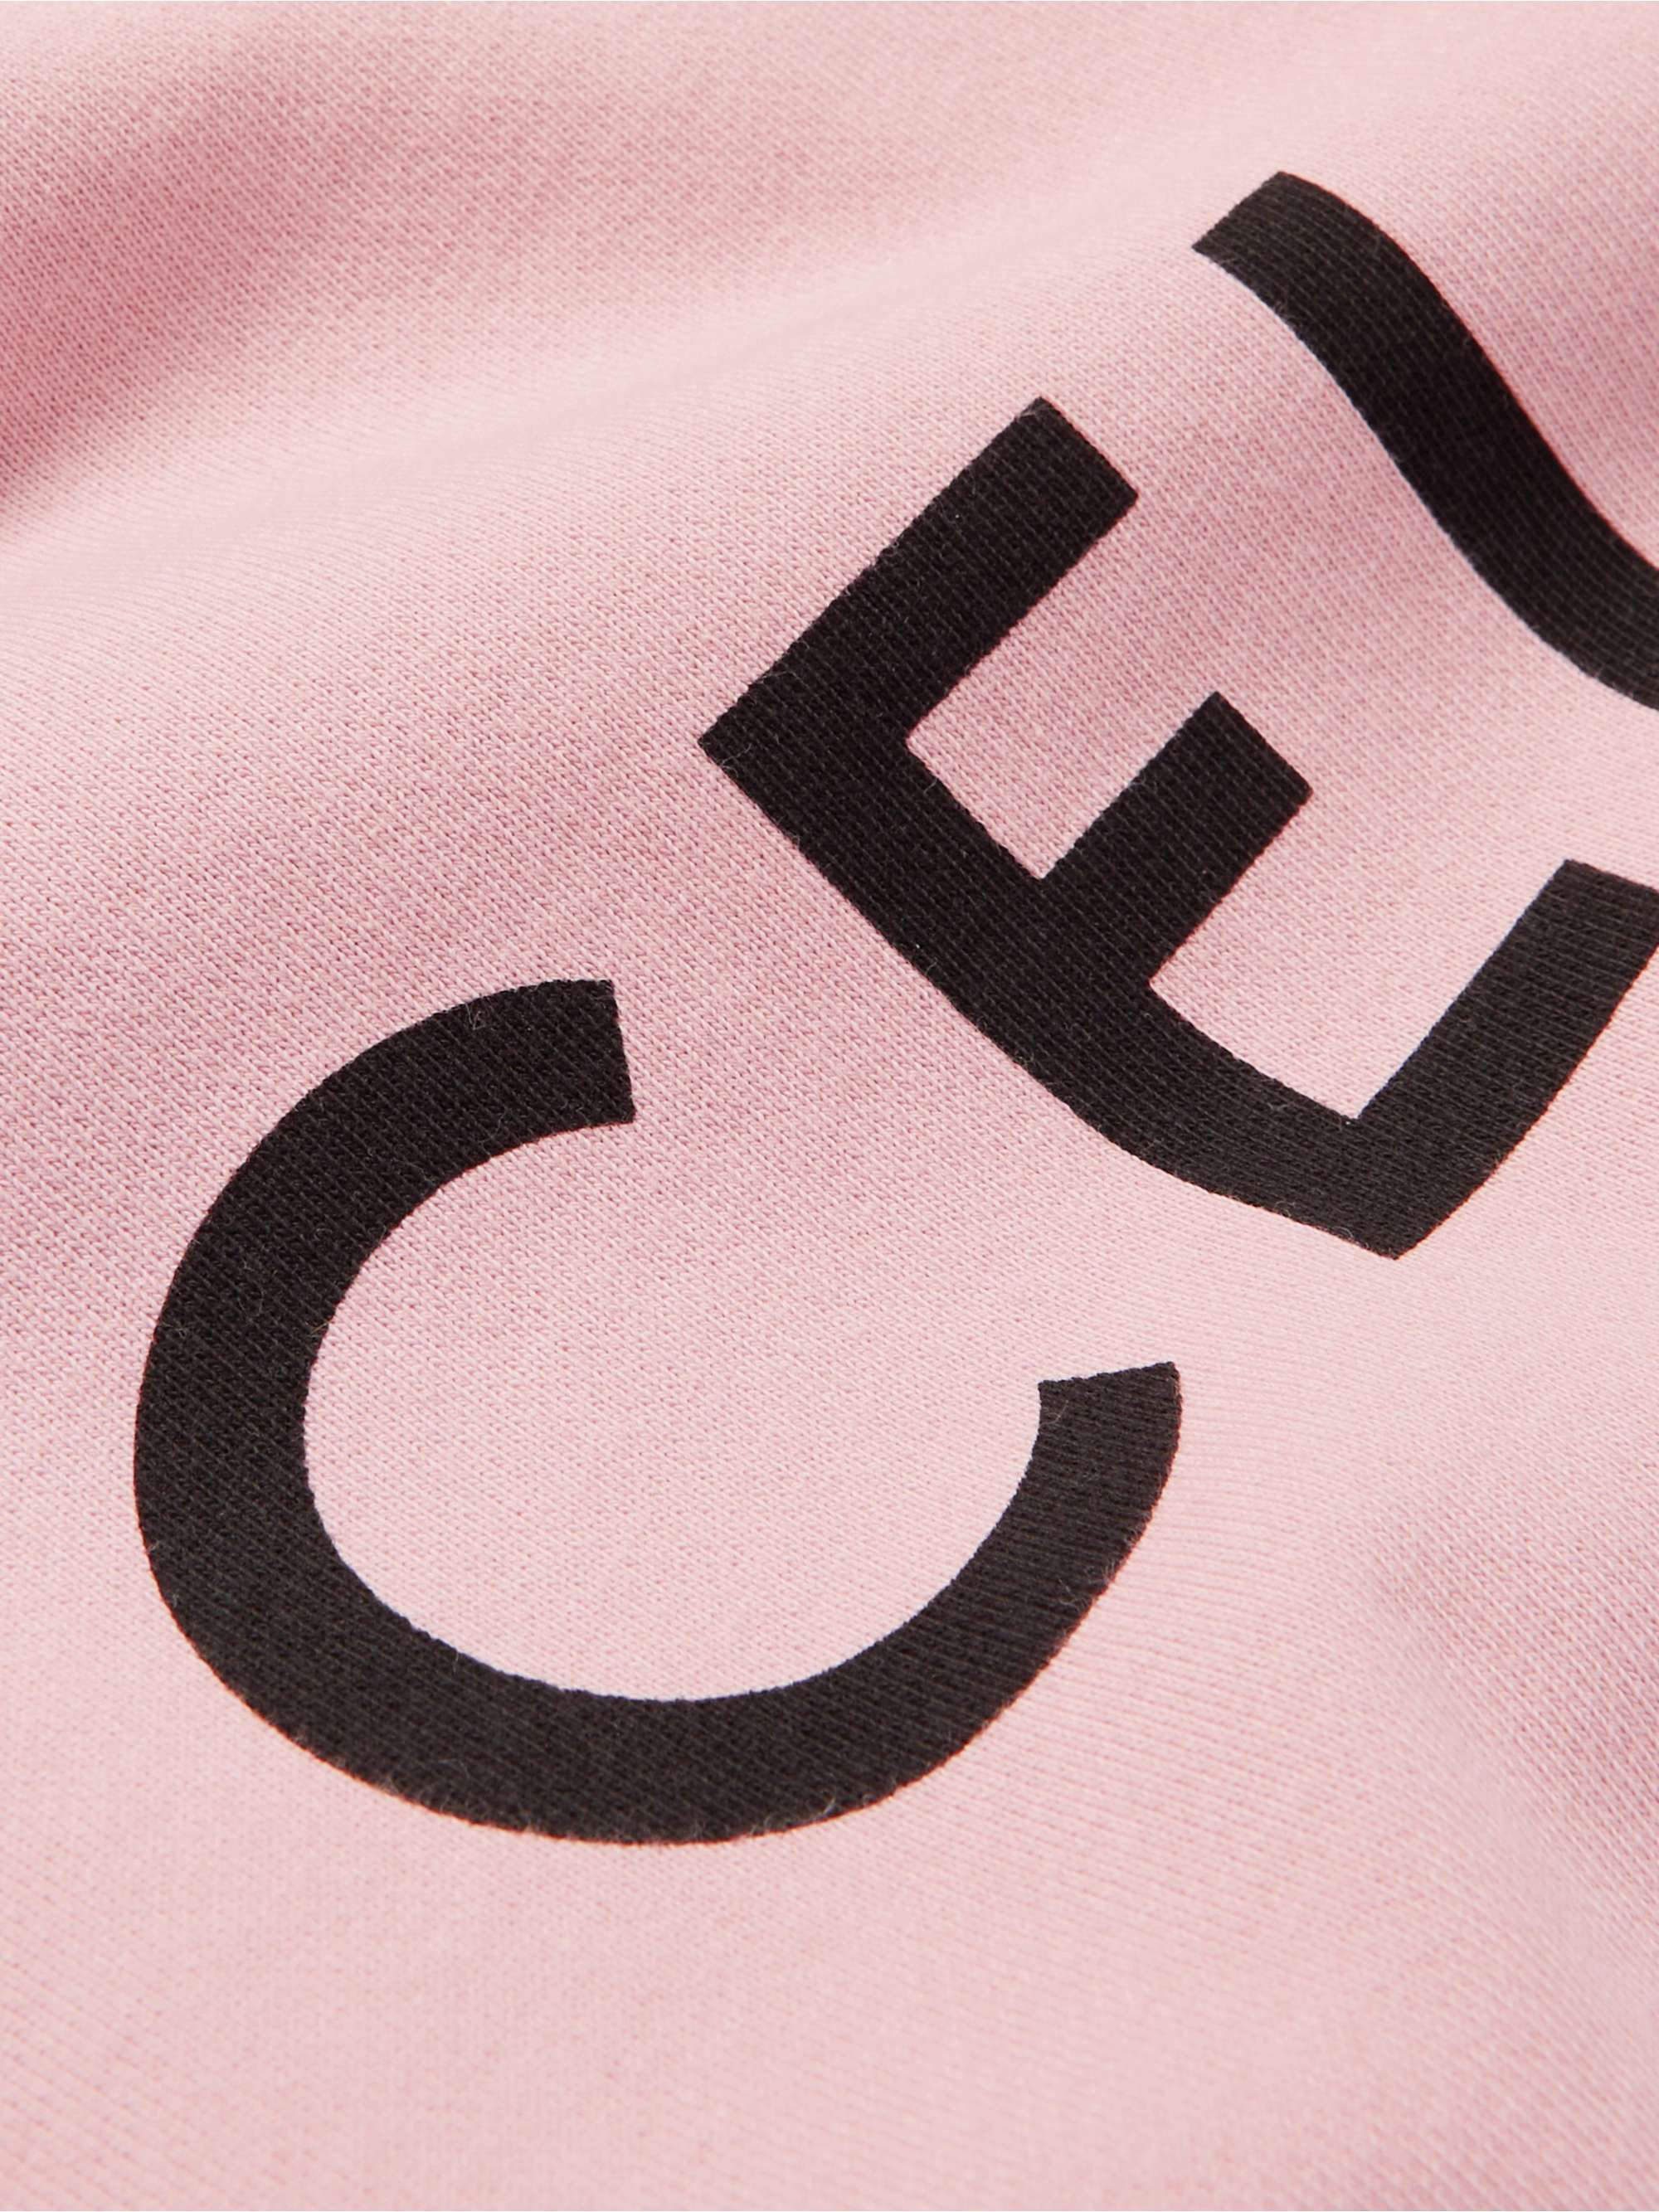 CELINE Logo-Print Cotton-Jersey Hoodie